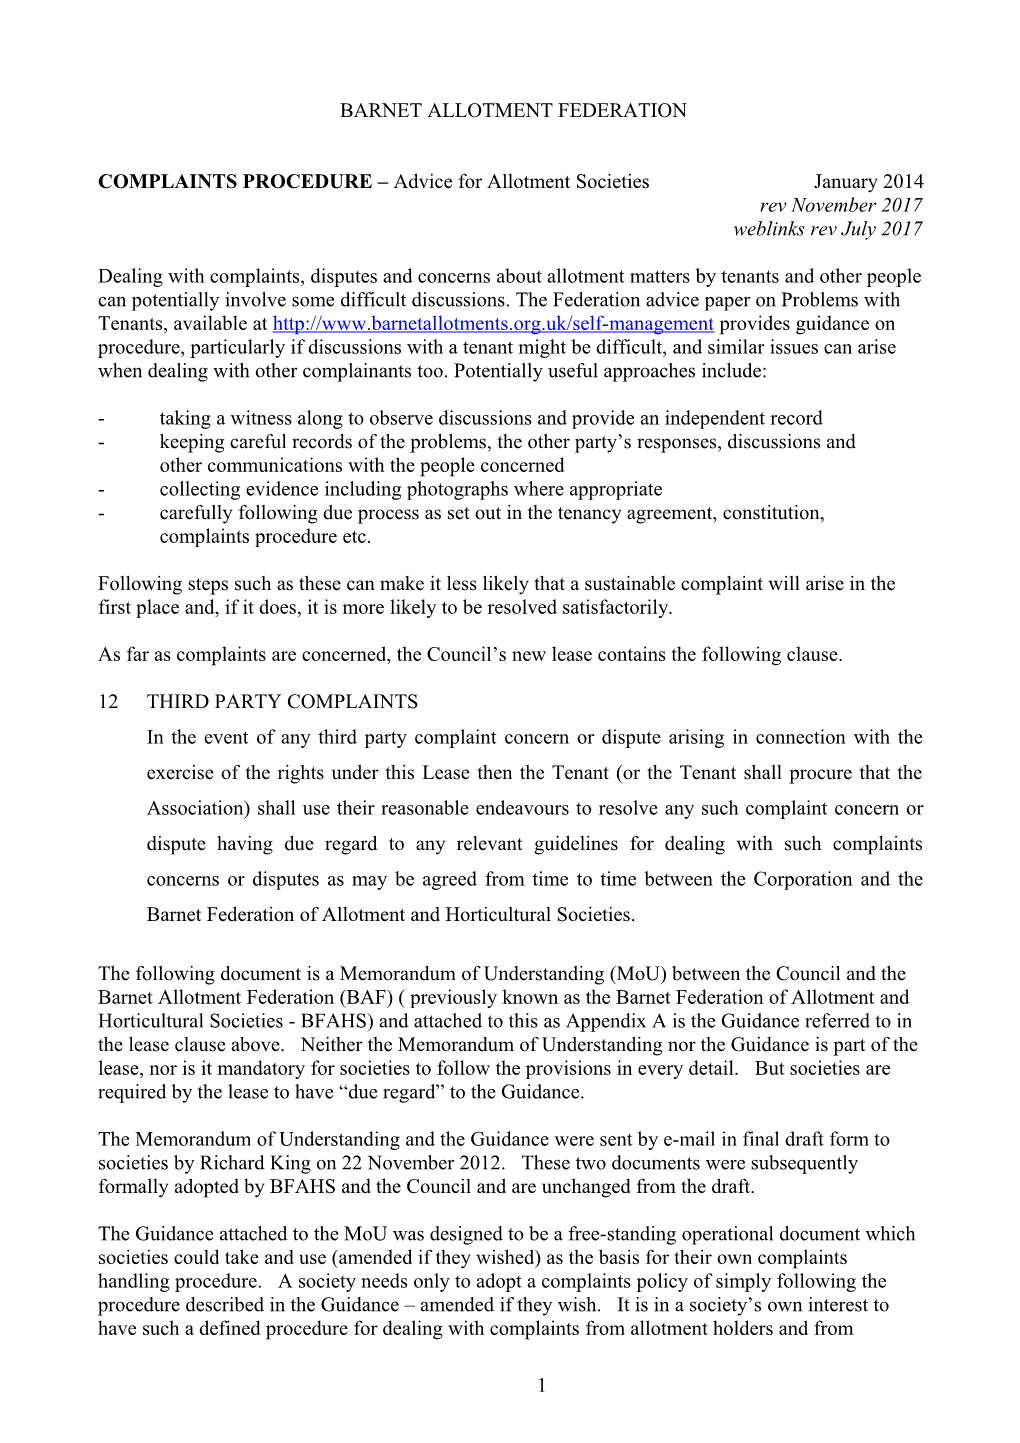 Memorandum of Understanding Between the London Borough of Barnet and Barnet Federation